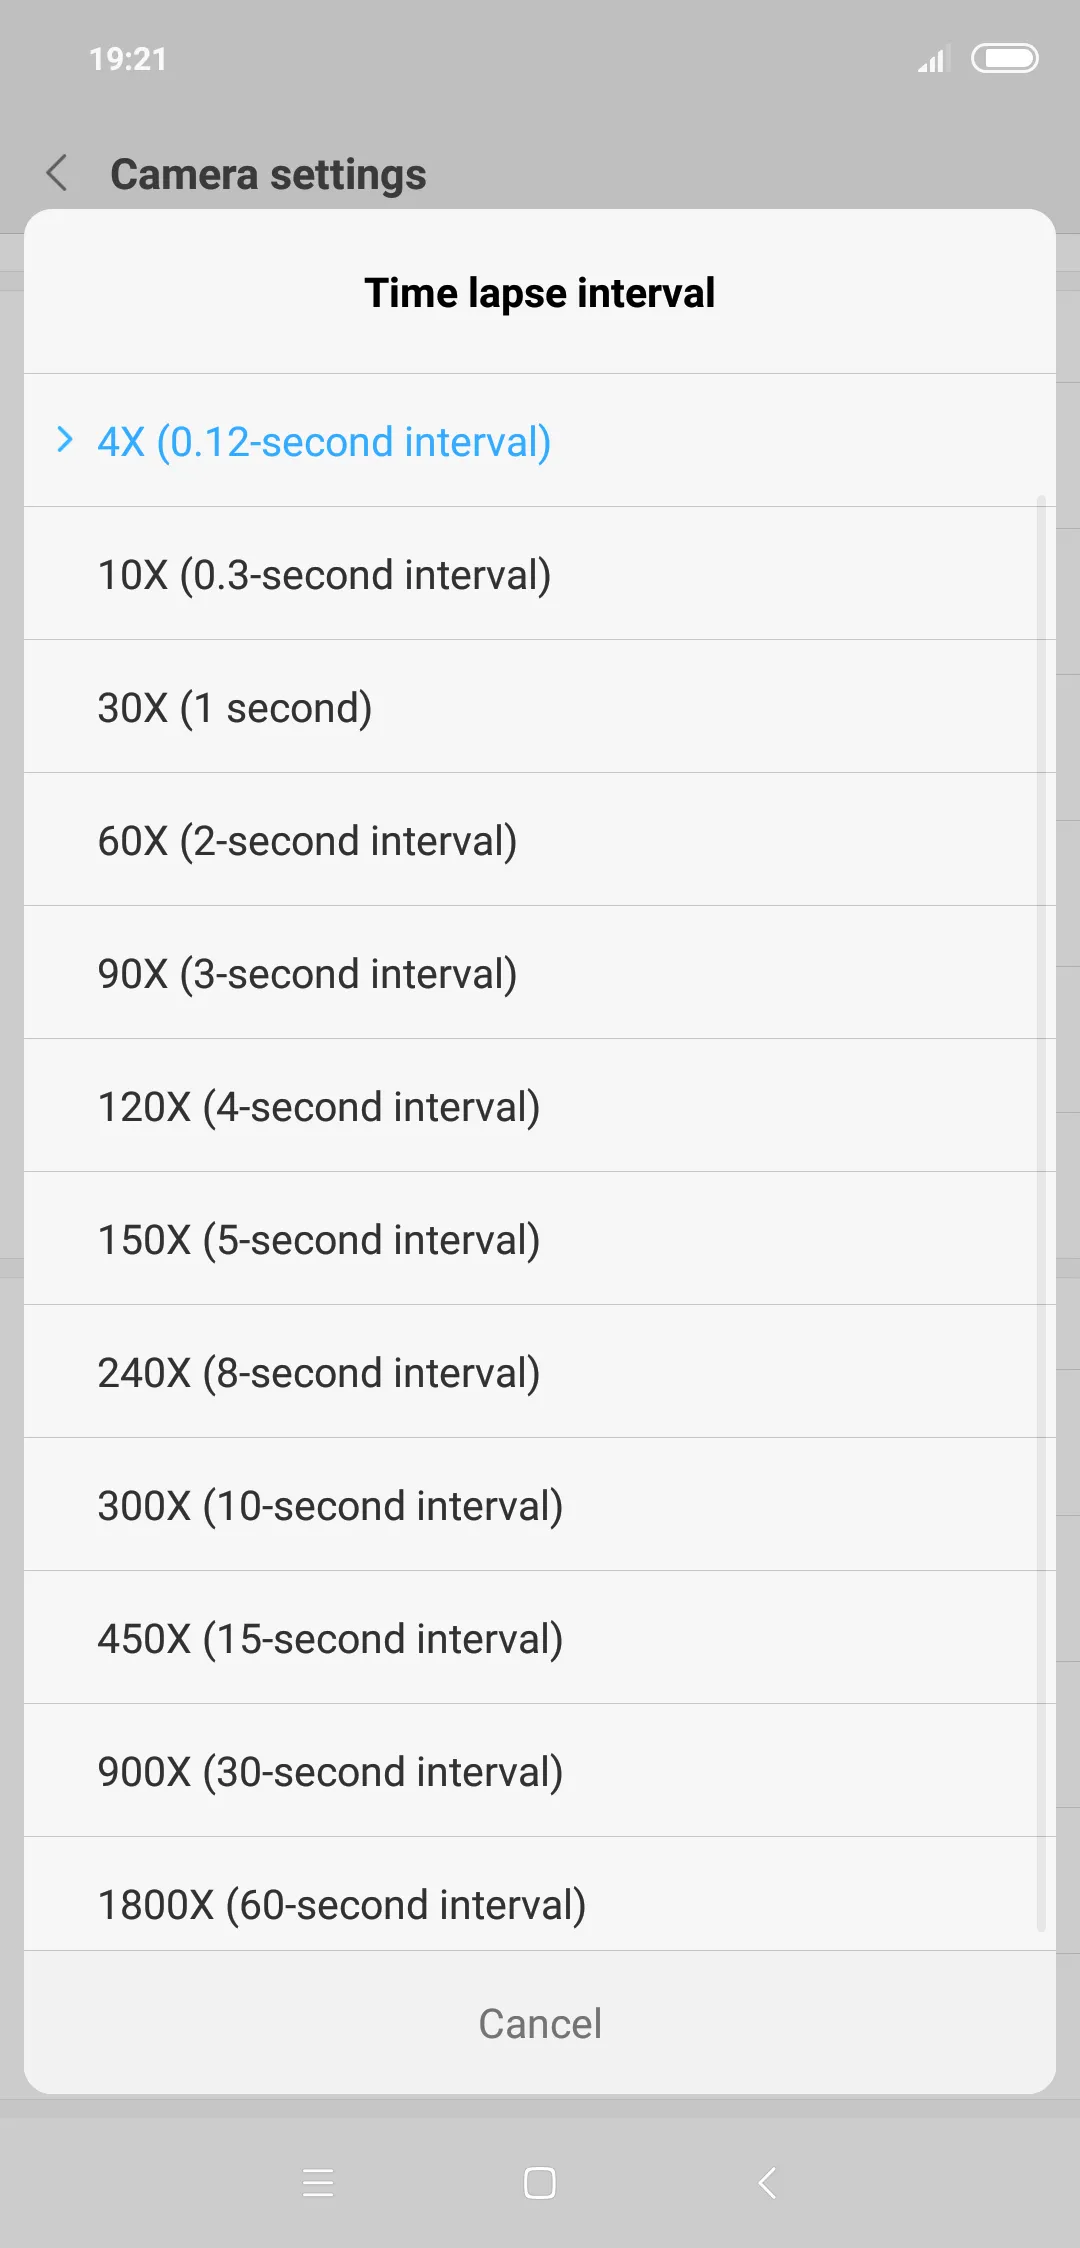 Xiaomi Mi 8 6GB 128GB (Global version) time lapse interval